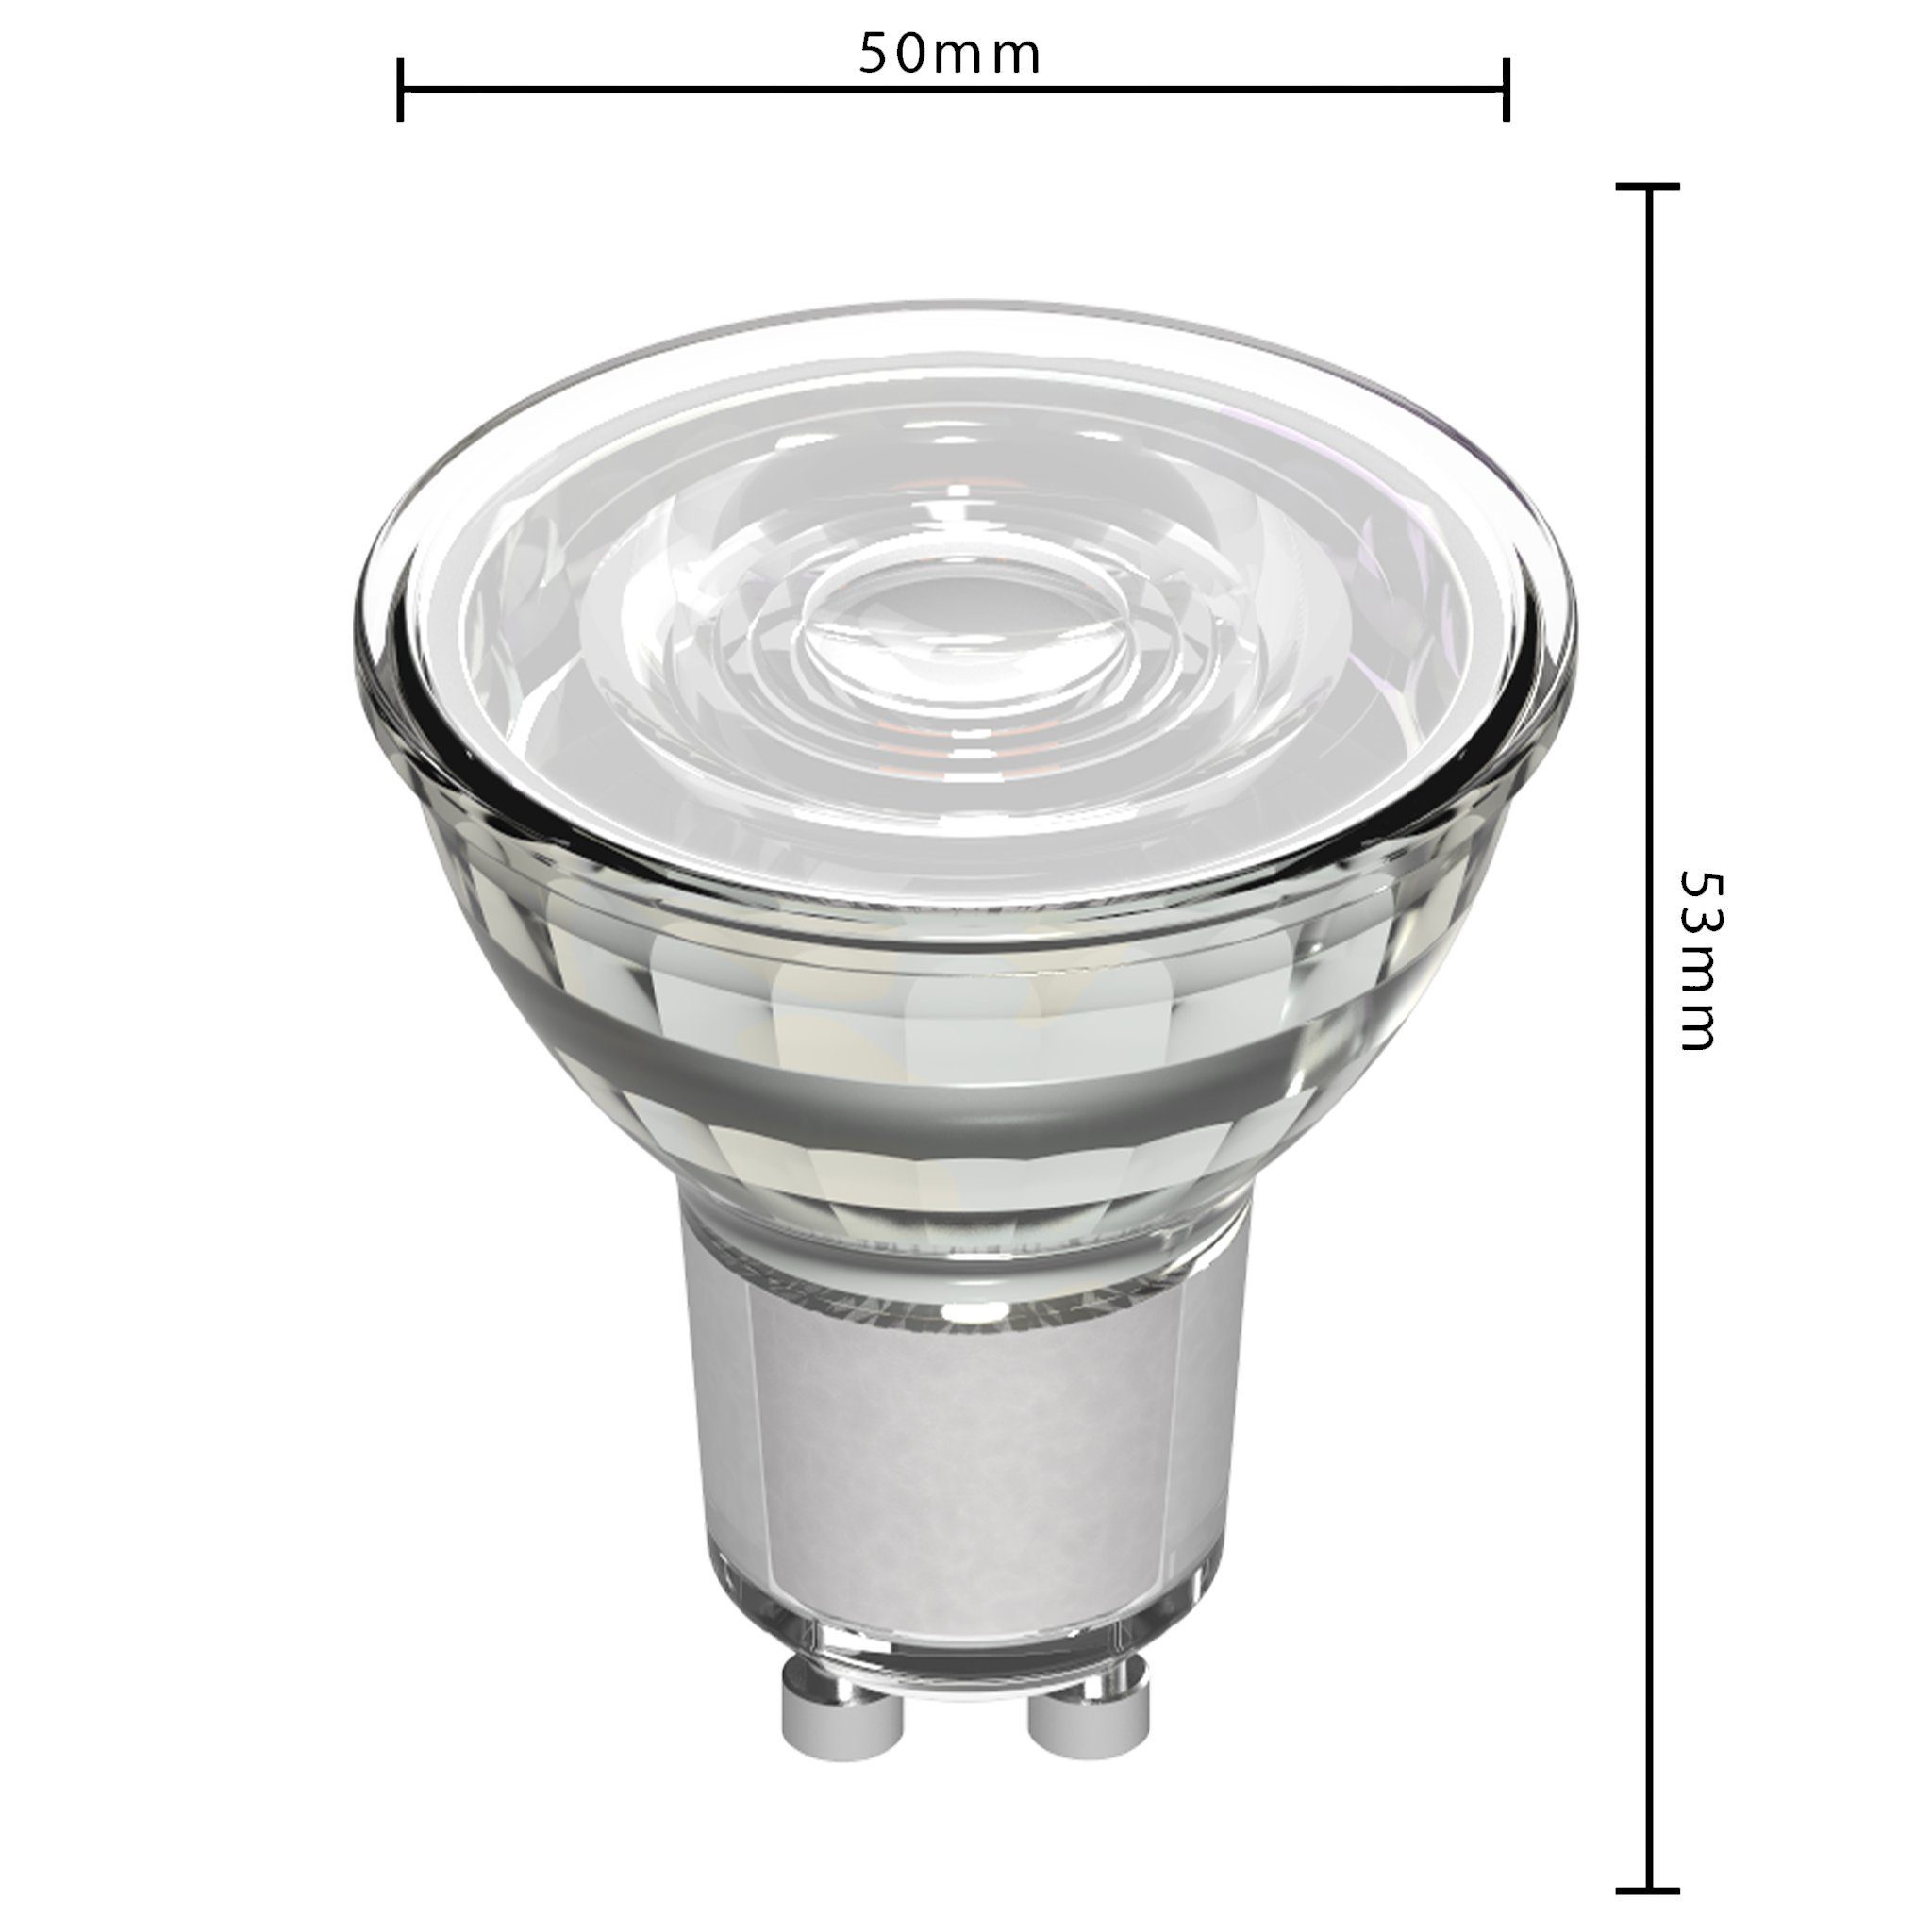 LED's light Klar GU10, GU10 LED-Leuchtmittel LED 0620120 PAR16 3W Spot, warmweiß